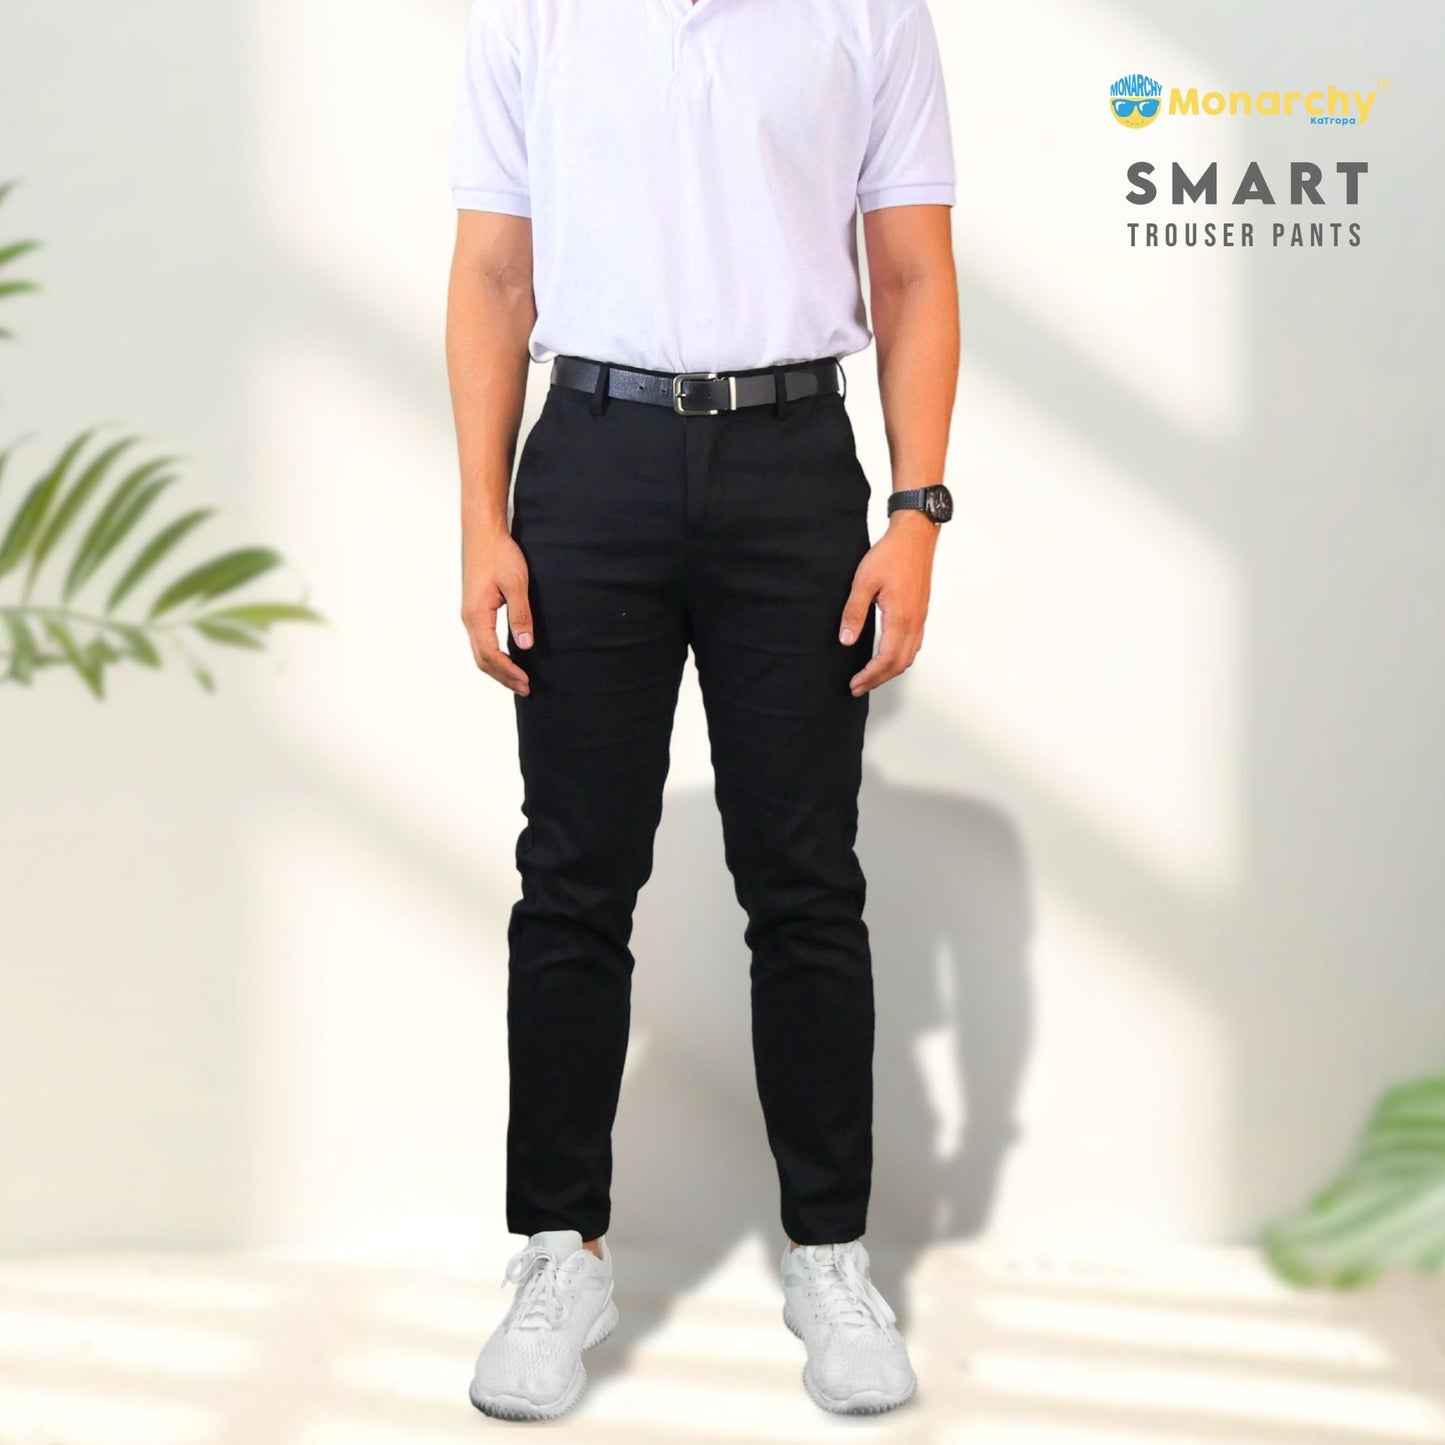 Monarchy Official Smart Trouser Pants  I High Quality Fashion Men’s Straight Cut Trouser Pants